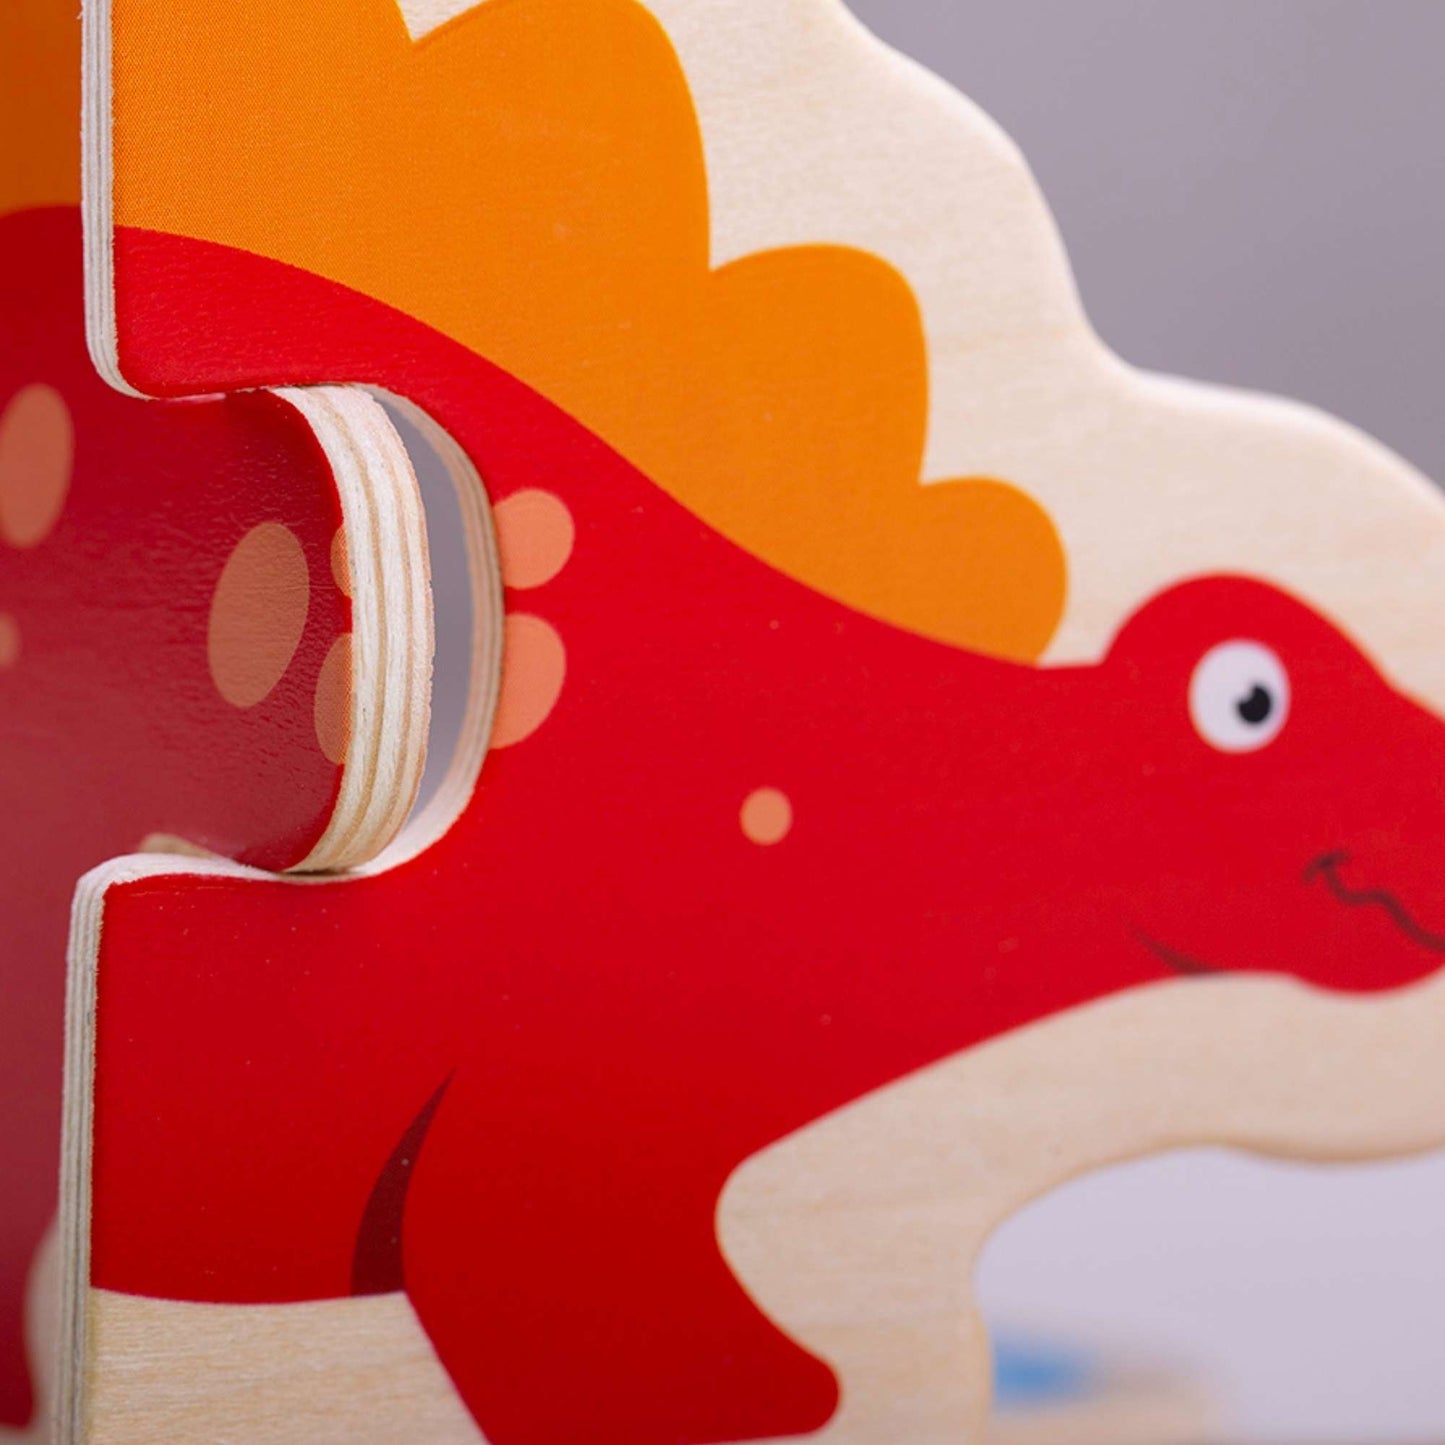 Dinosaur Theme Sensory Surprise Box - Suitable For Ages 1 year+